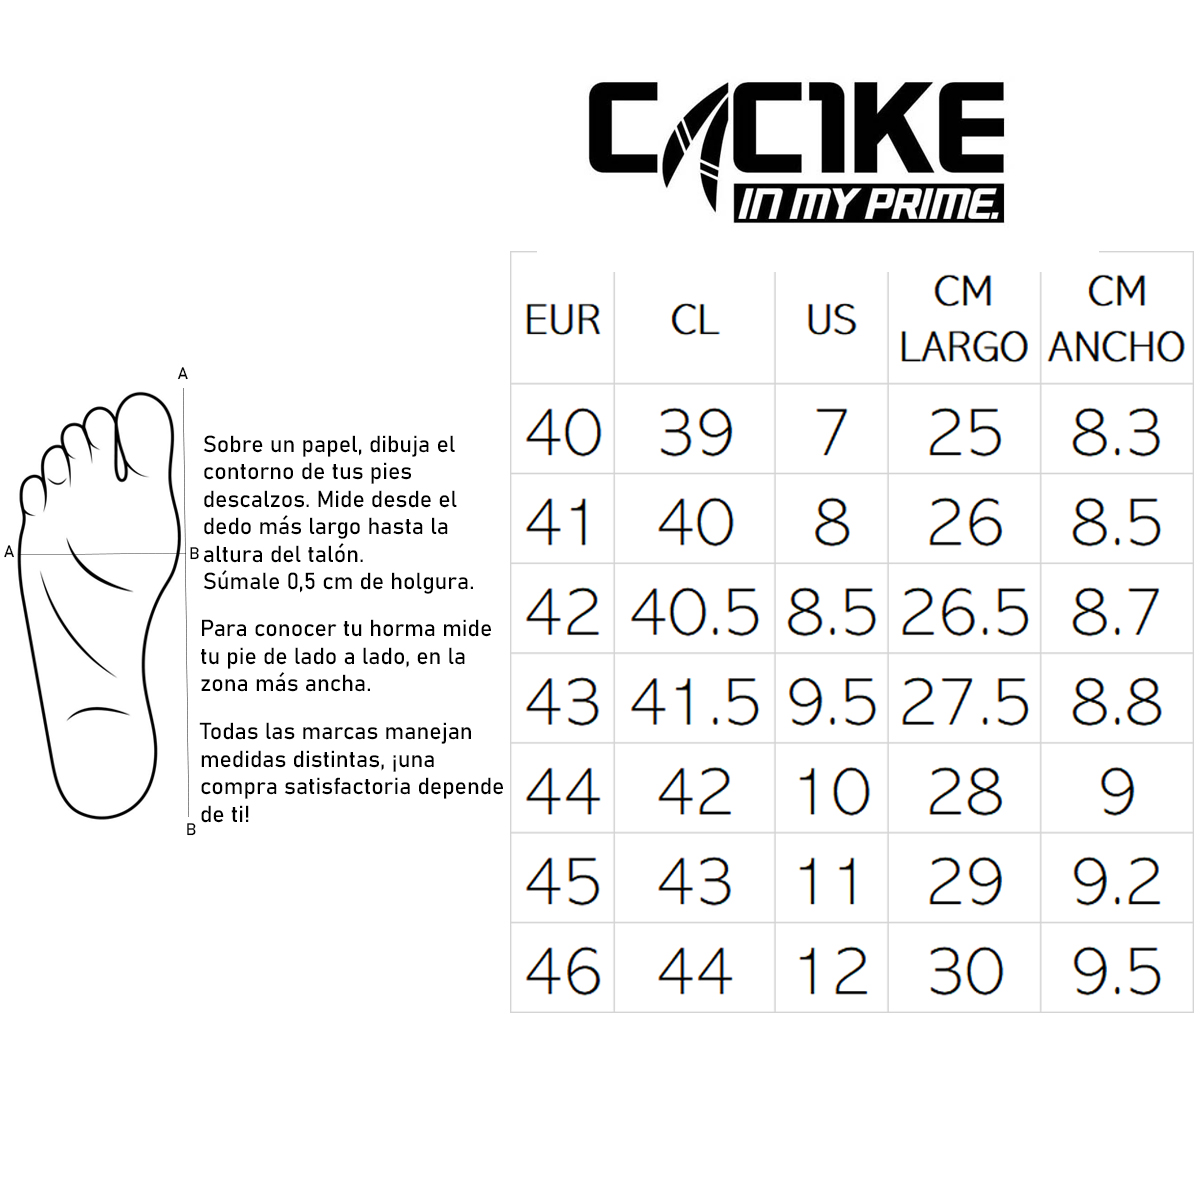 Zapatillas De Futbol Hombre Negro-Naranjo Forza Cac1ke